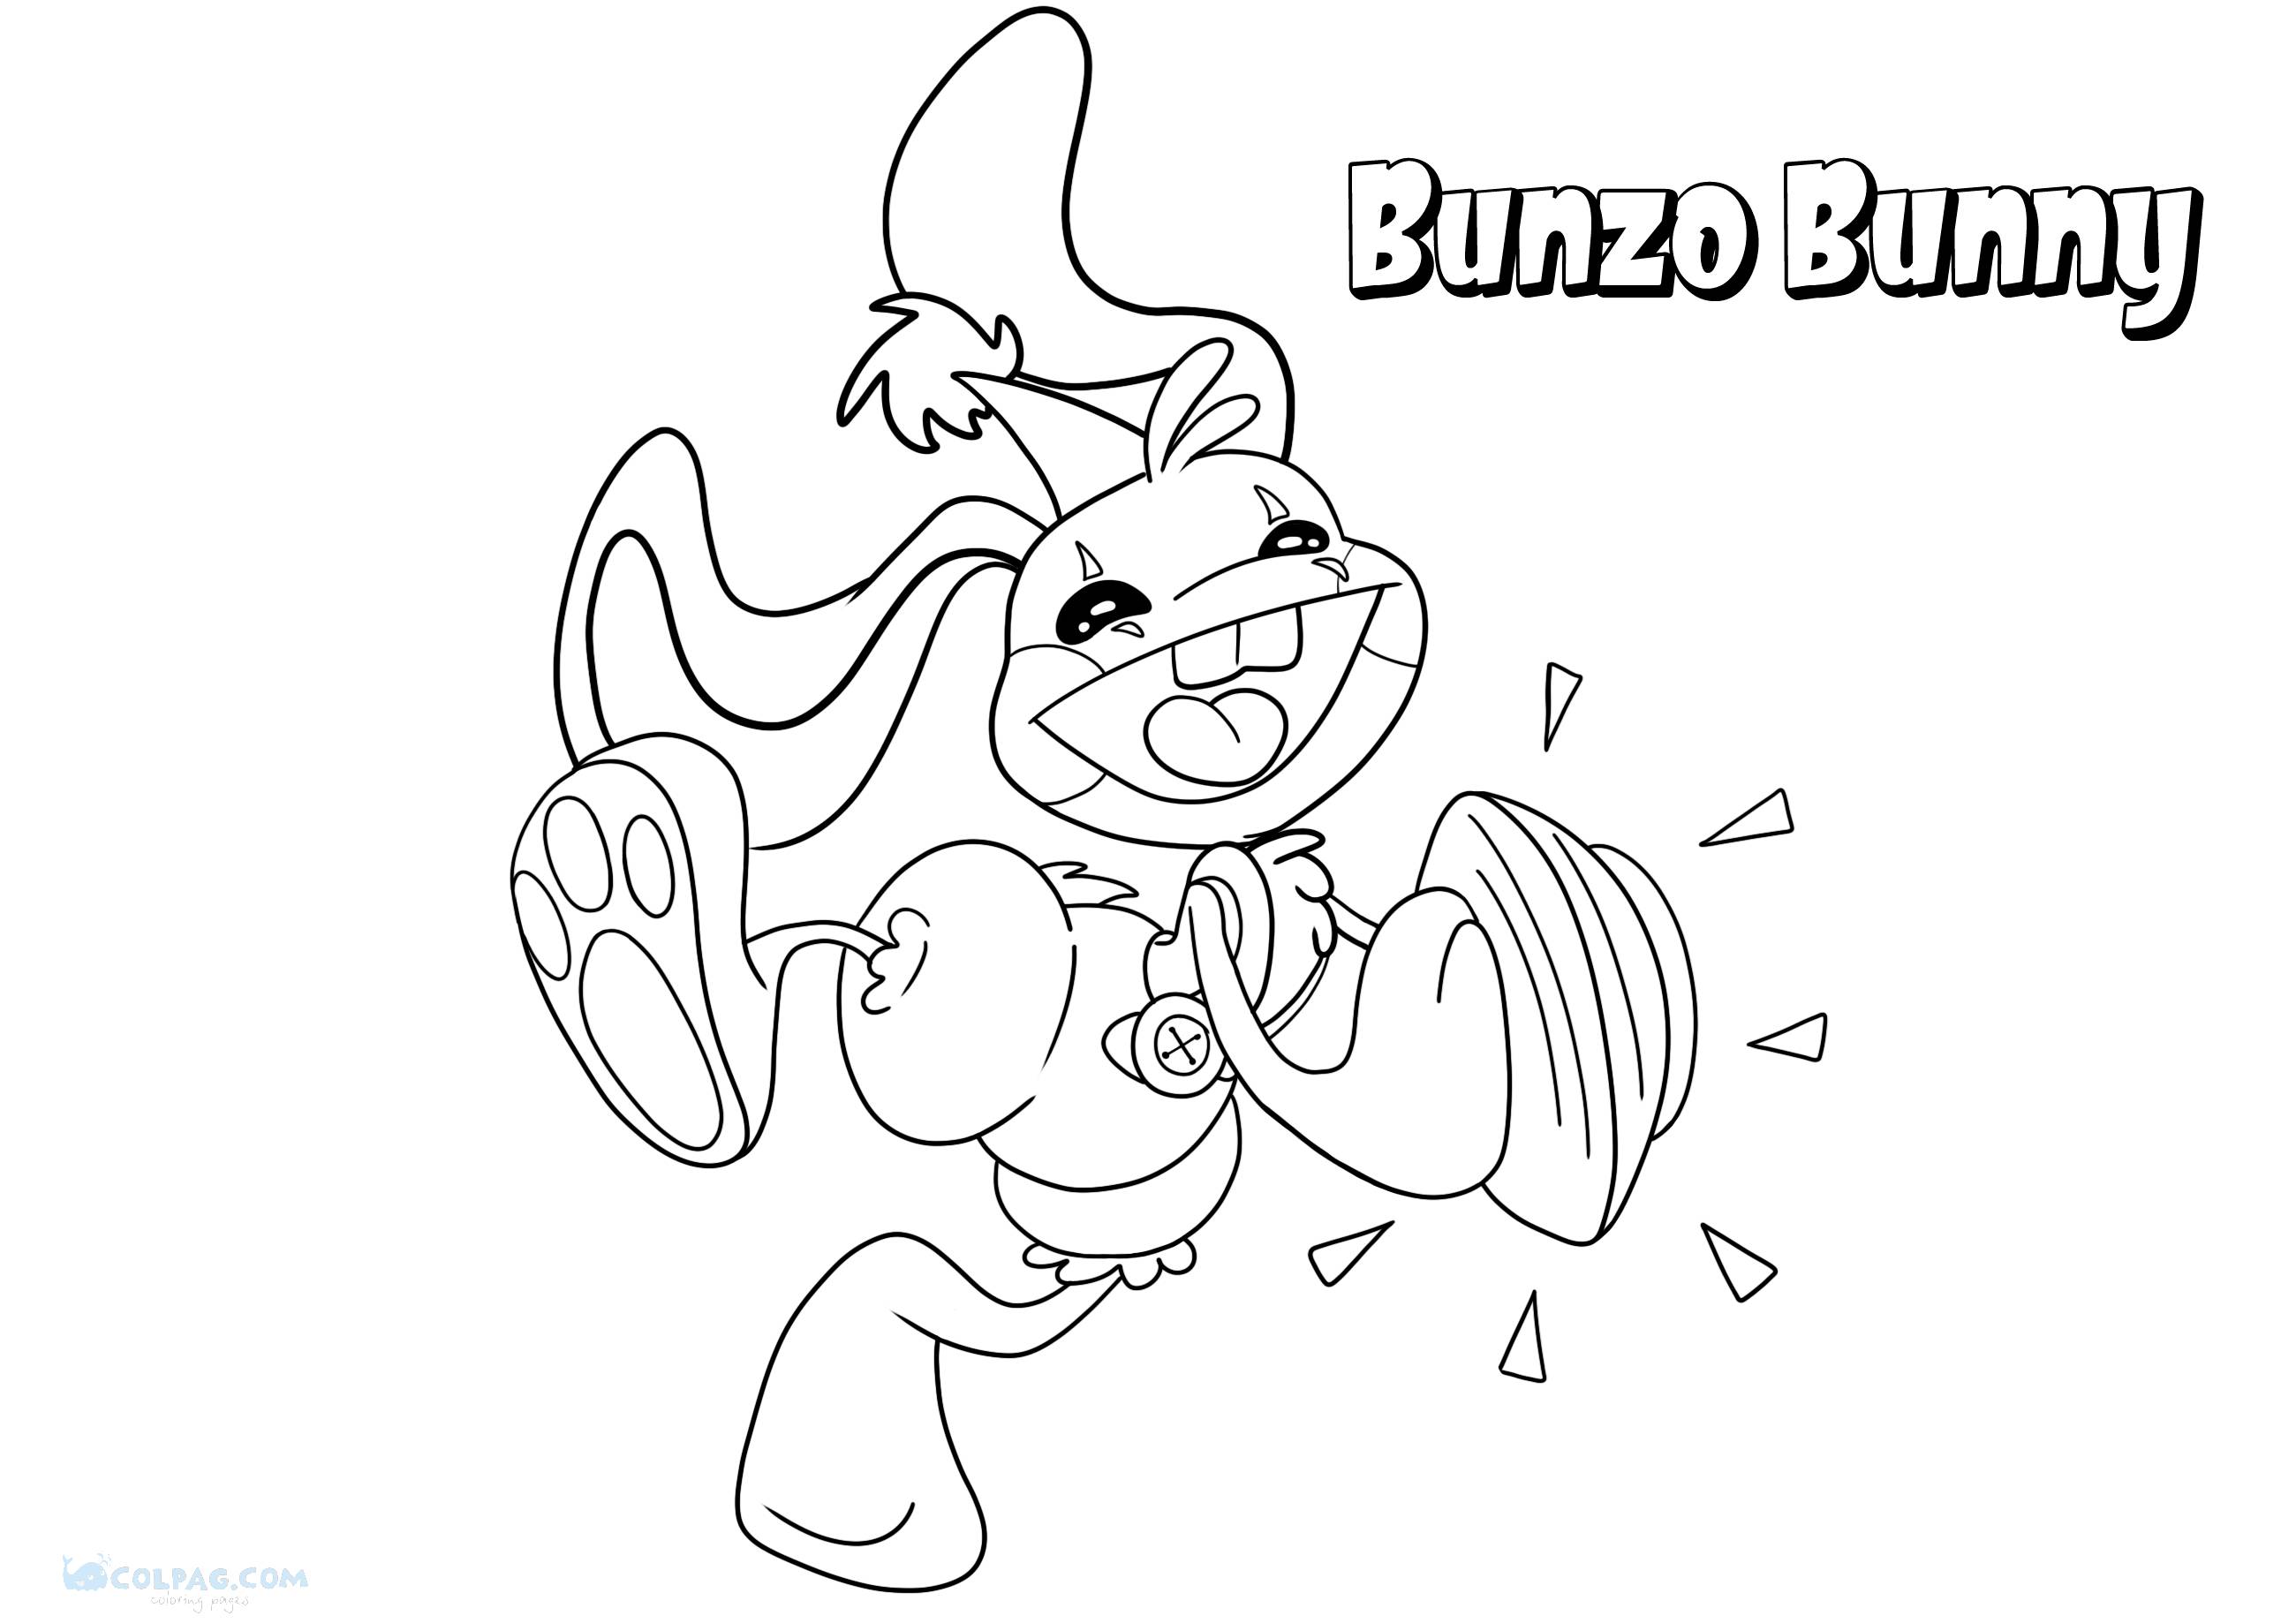 bunzo-bunny-coloring-page-colpag-com-9